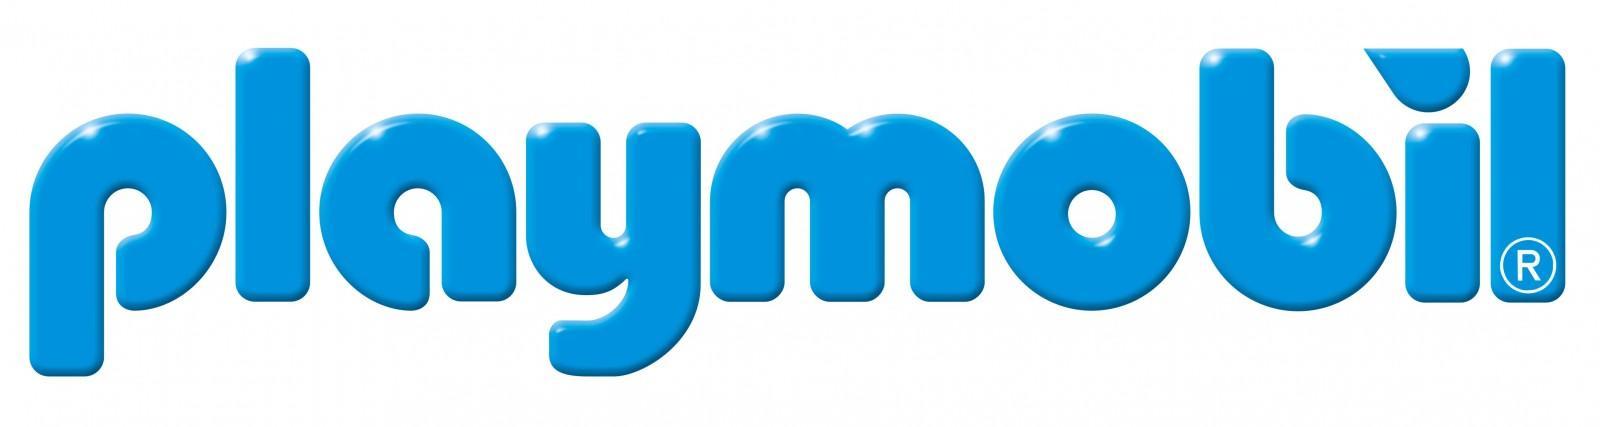 playmobil-logo-1600x427.jpg